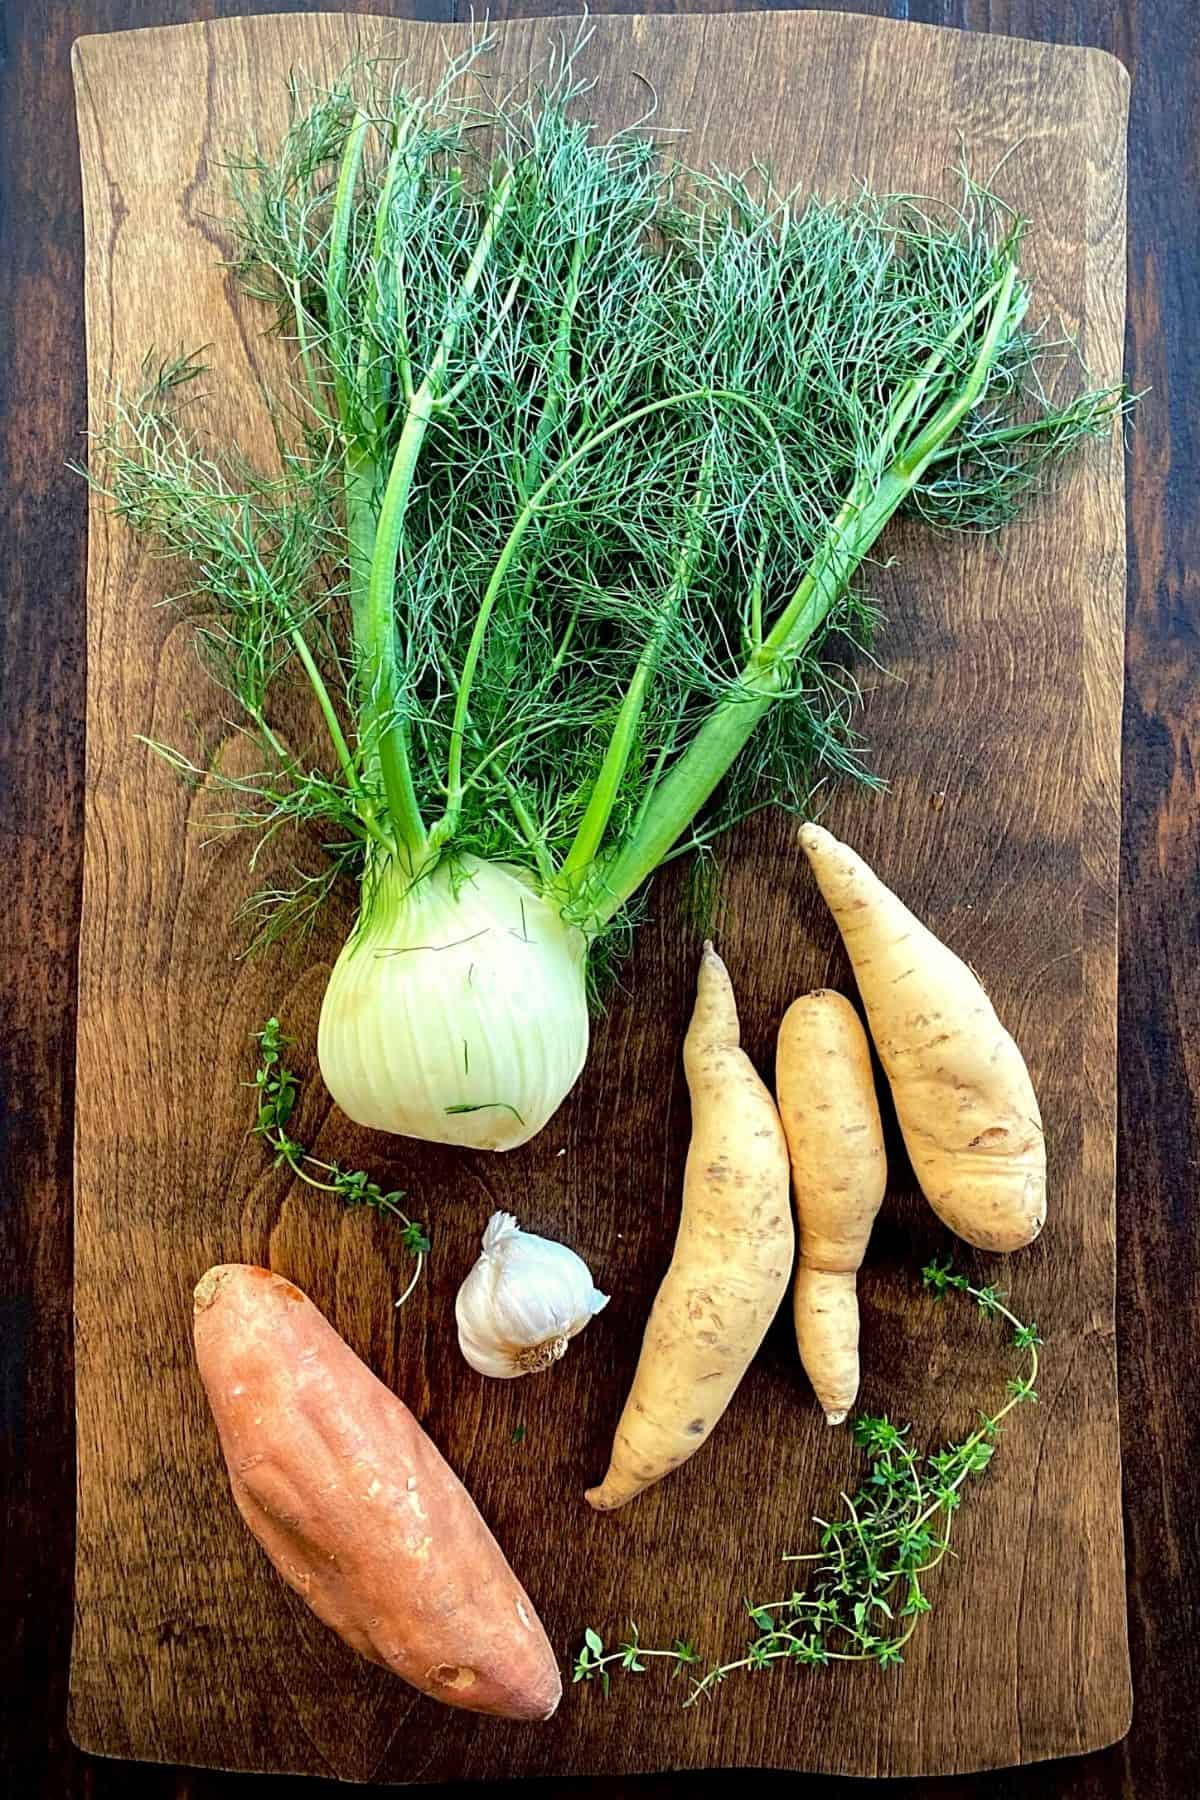 fennel, sweet potatoes, garlic and thyme on wood board